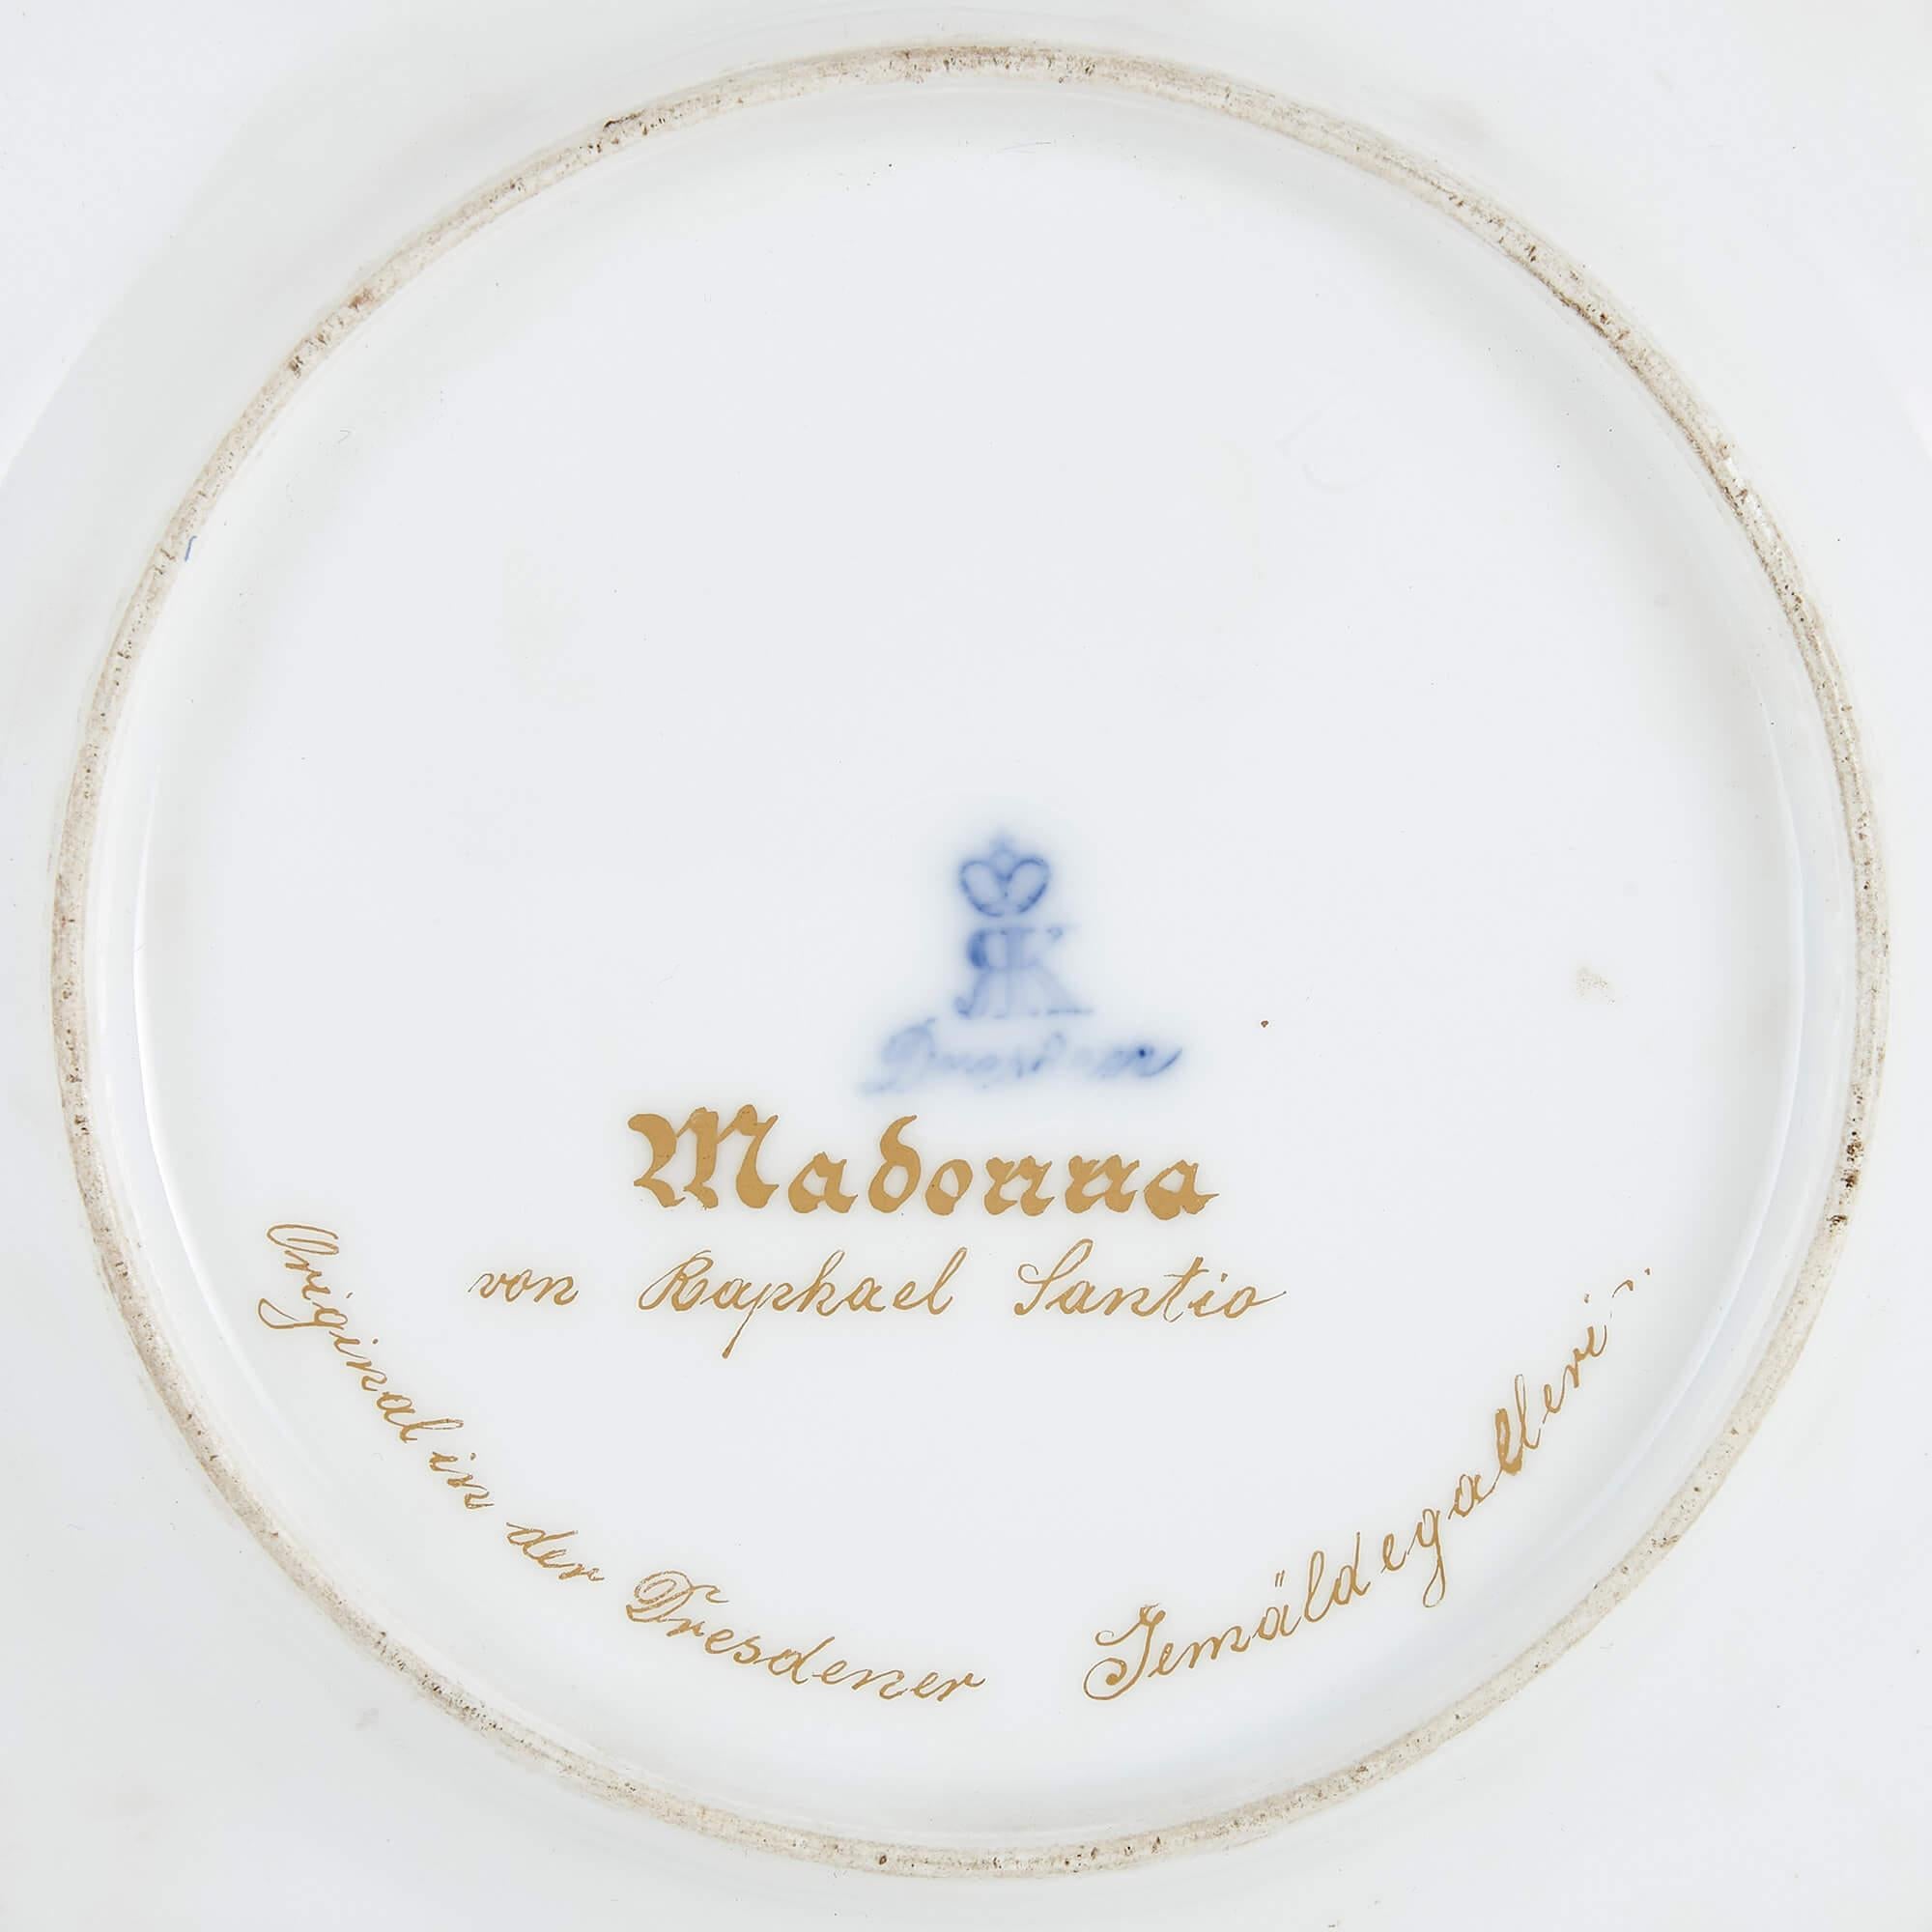 madonna plates